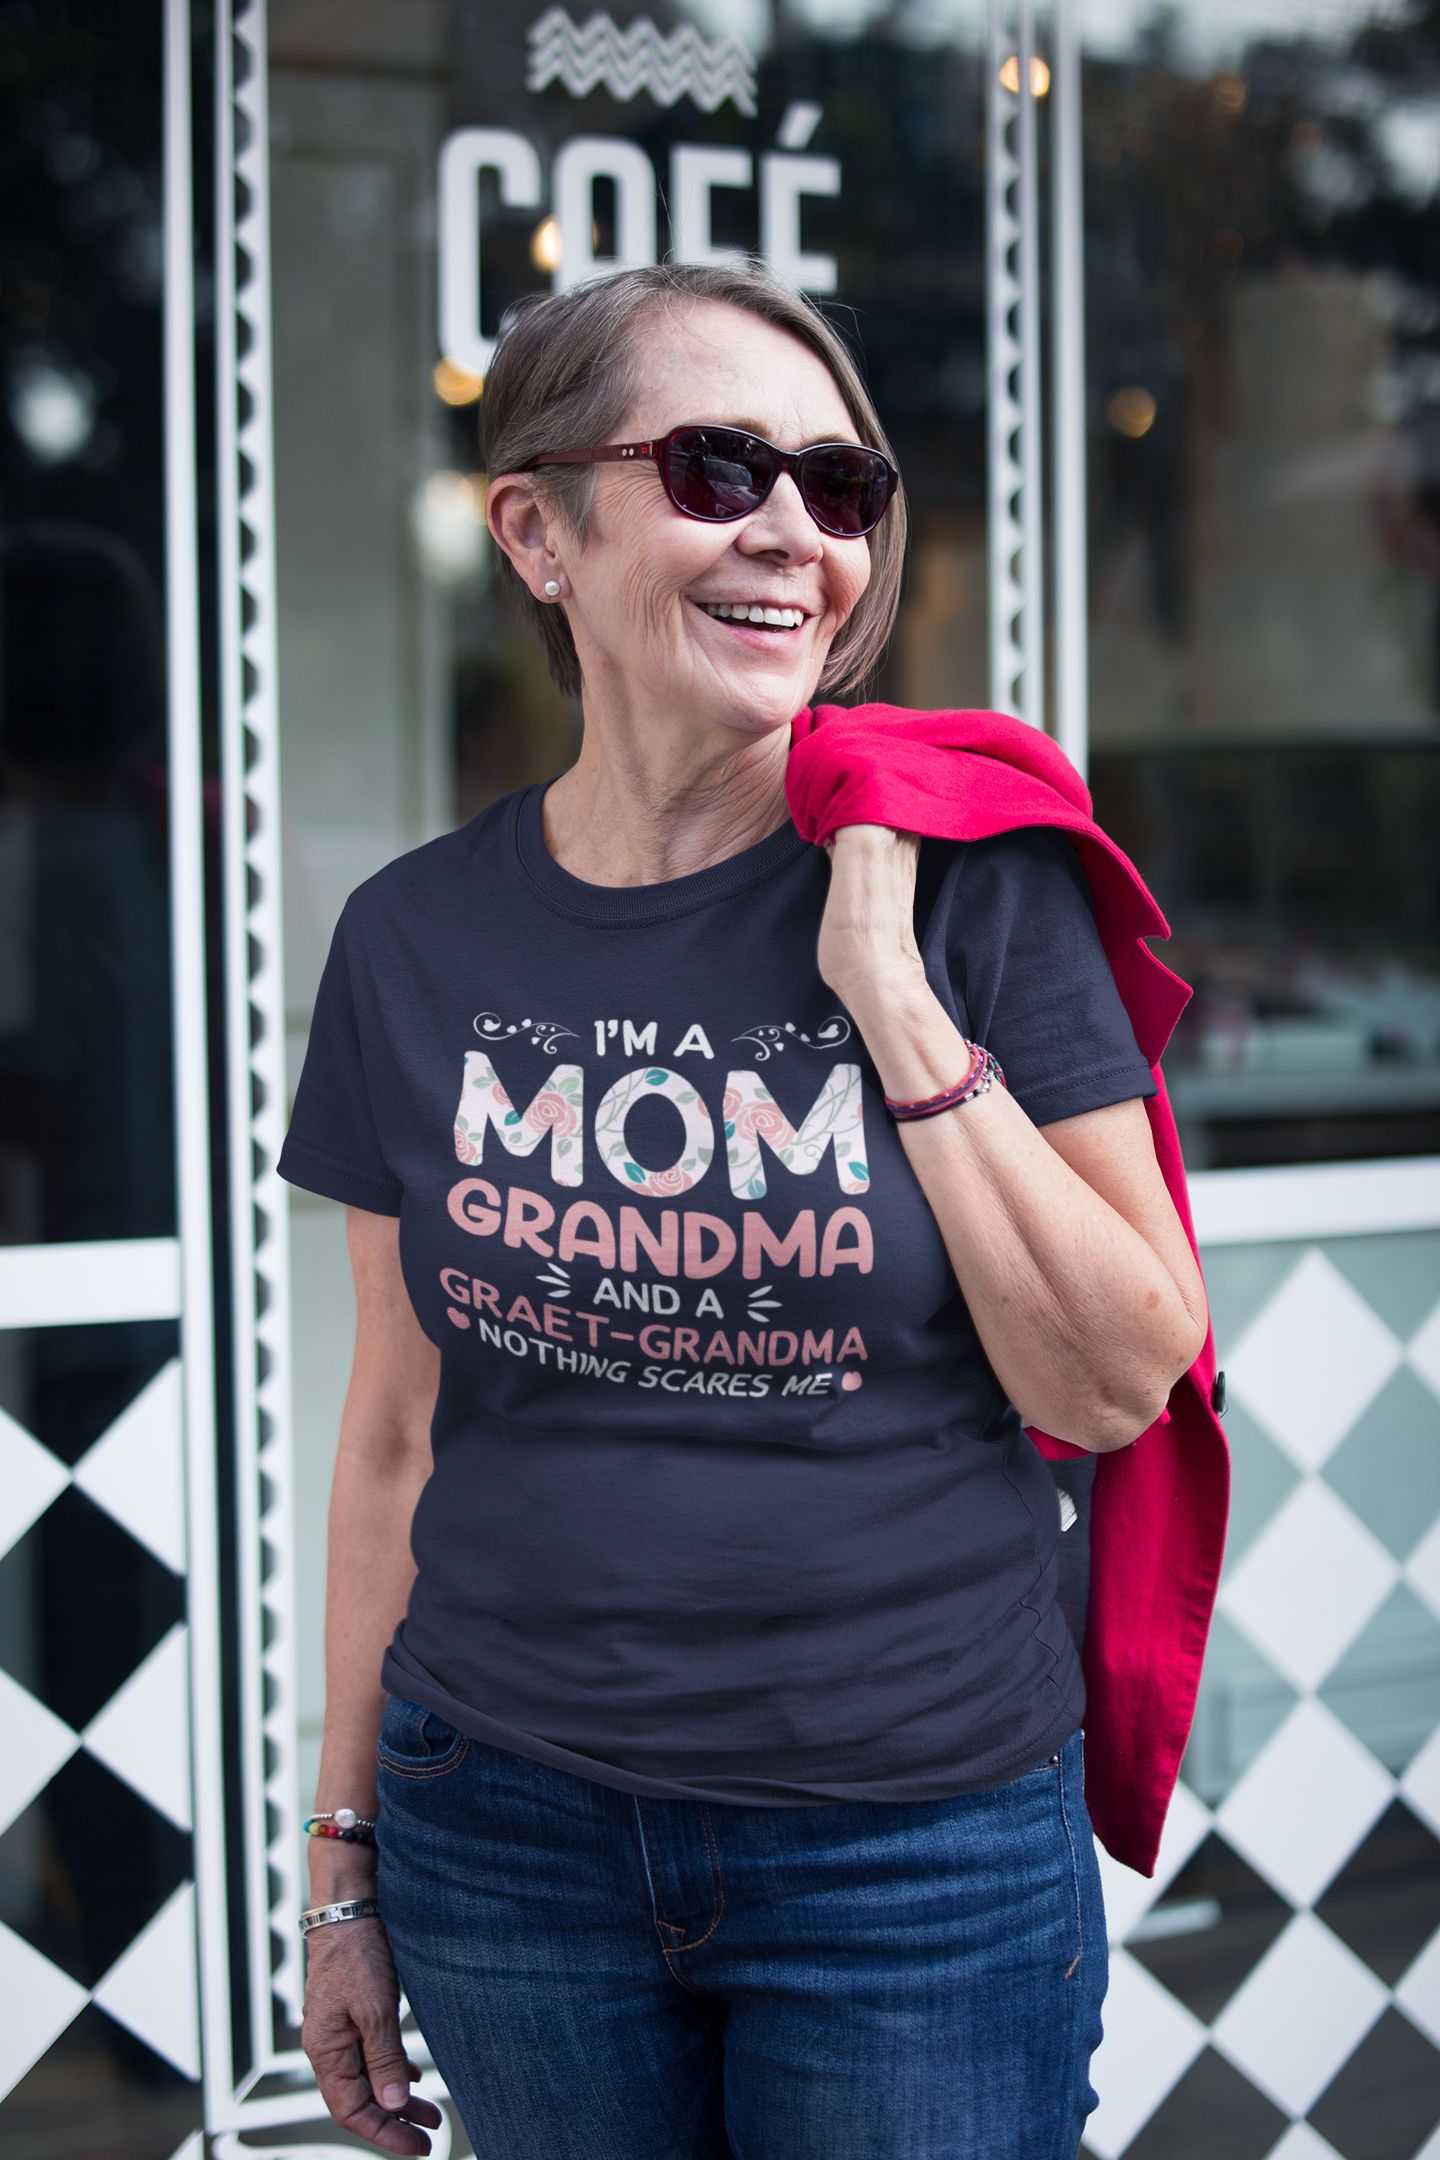 Mom and Grandma Mother's Day Shirt